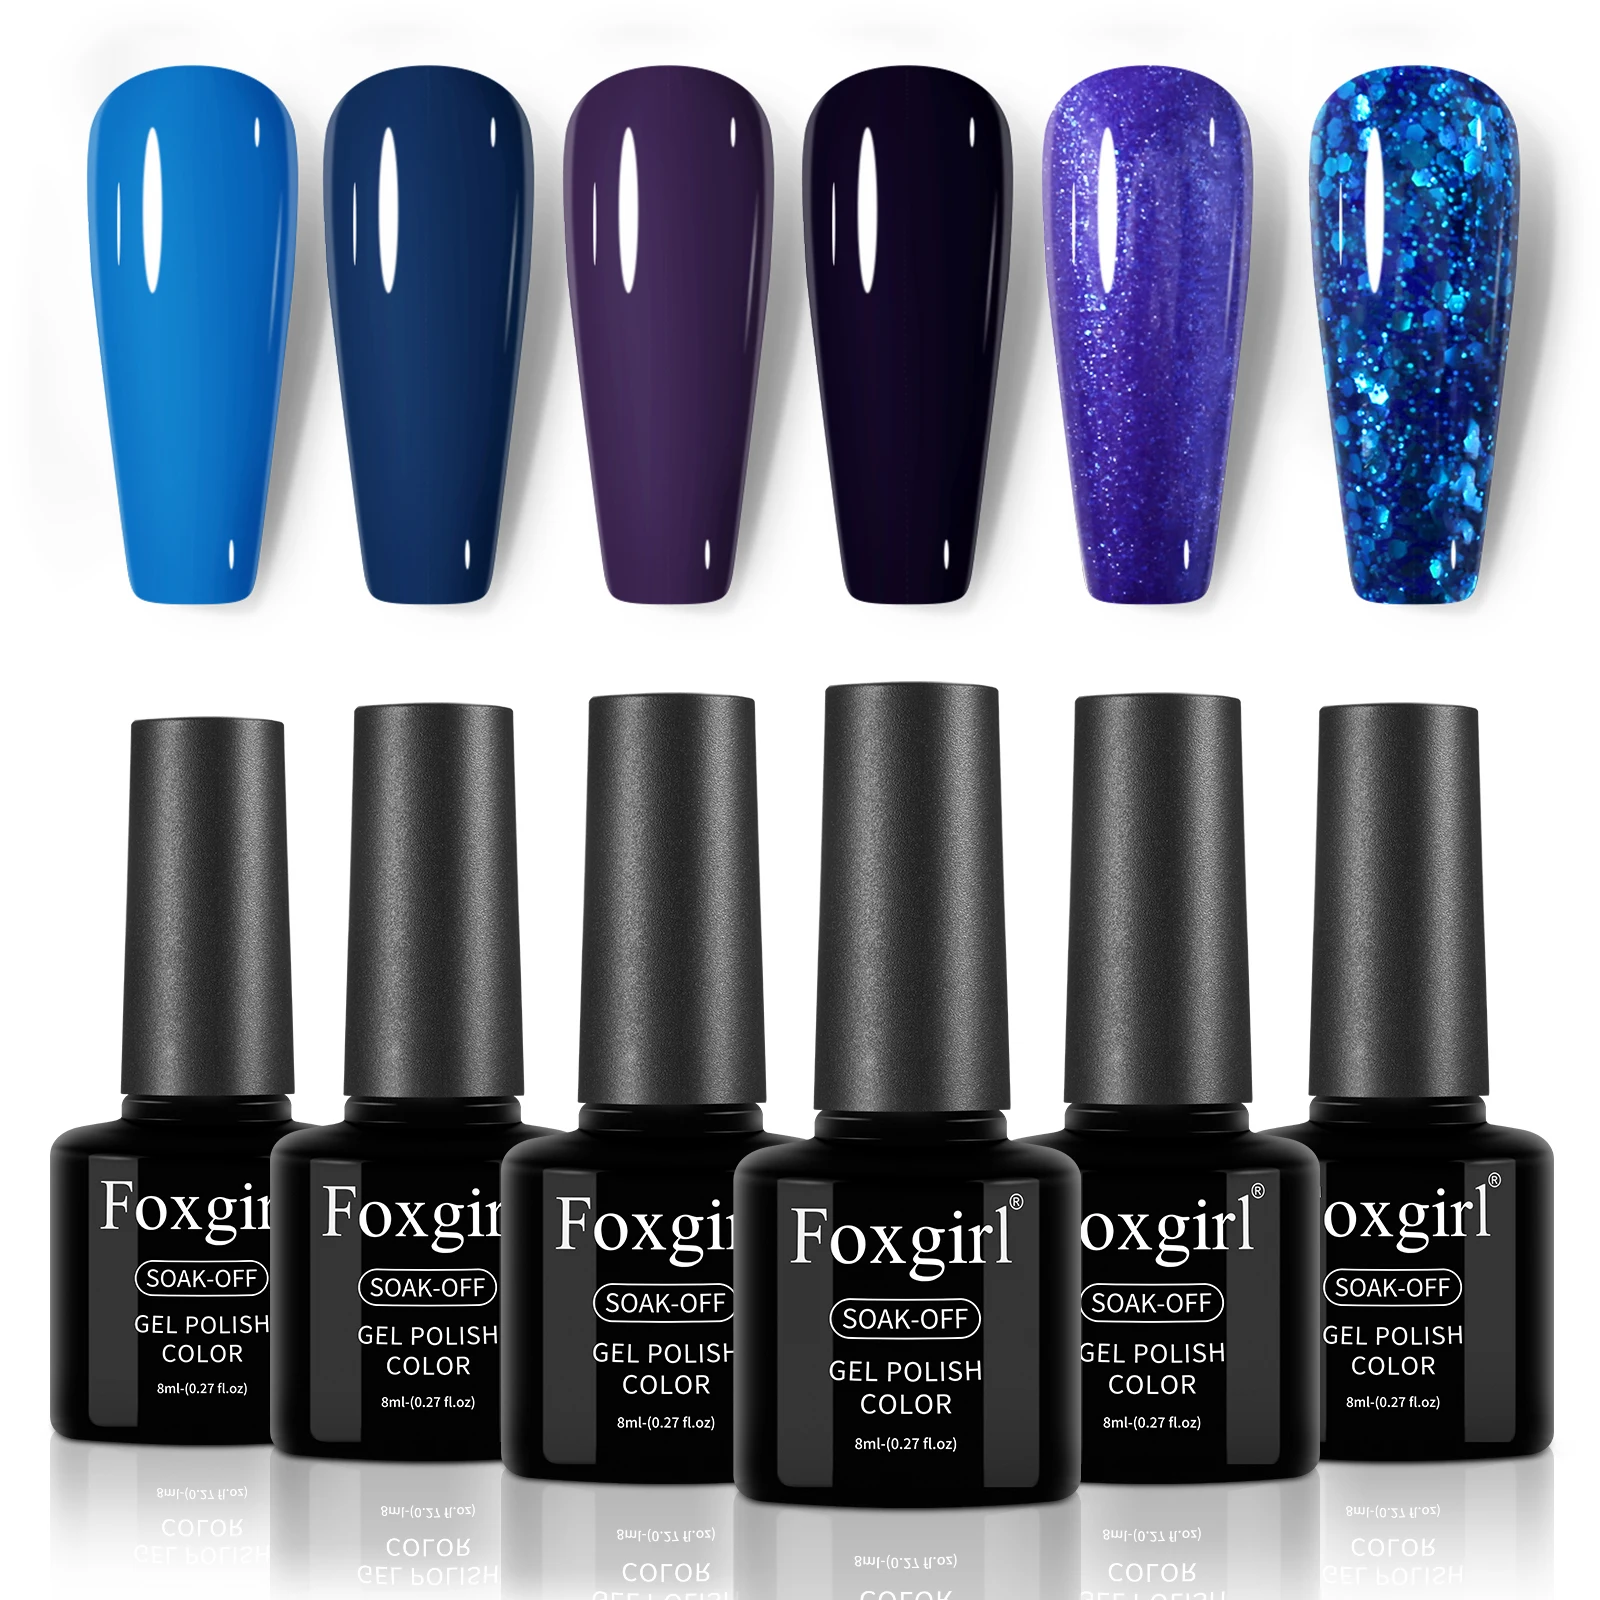 

Fall Winter Gel Nail Polish 6 Colors- Soak Off UV LED Gel Nail Polish Set Blue Glitter Colors, 8ml each Nail Gel Manicure Kit